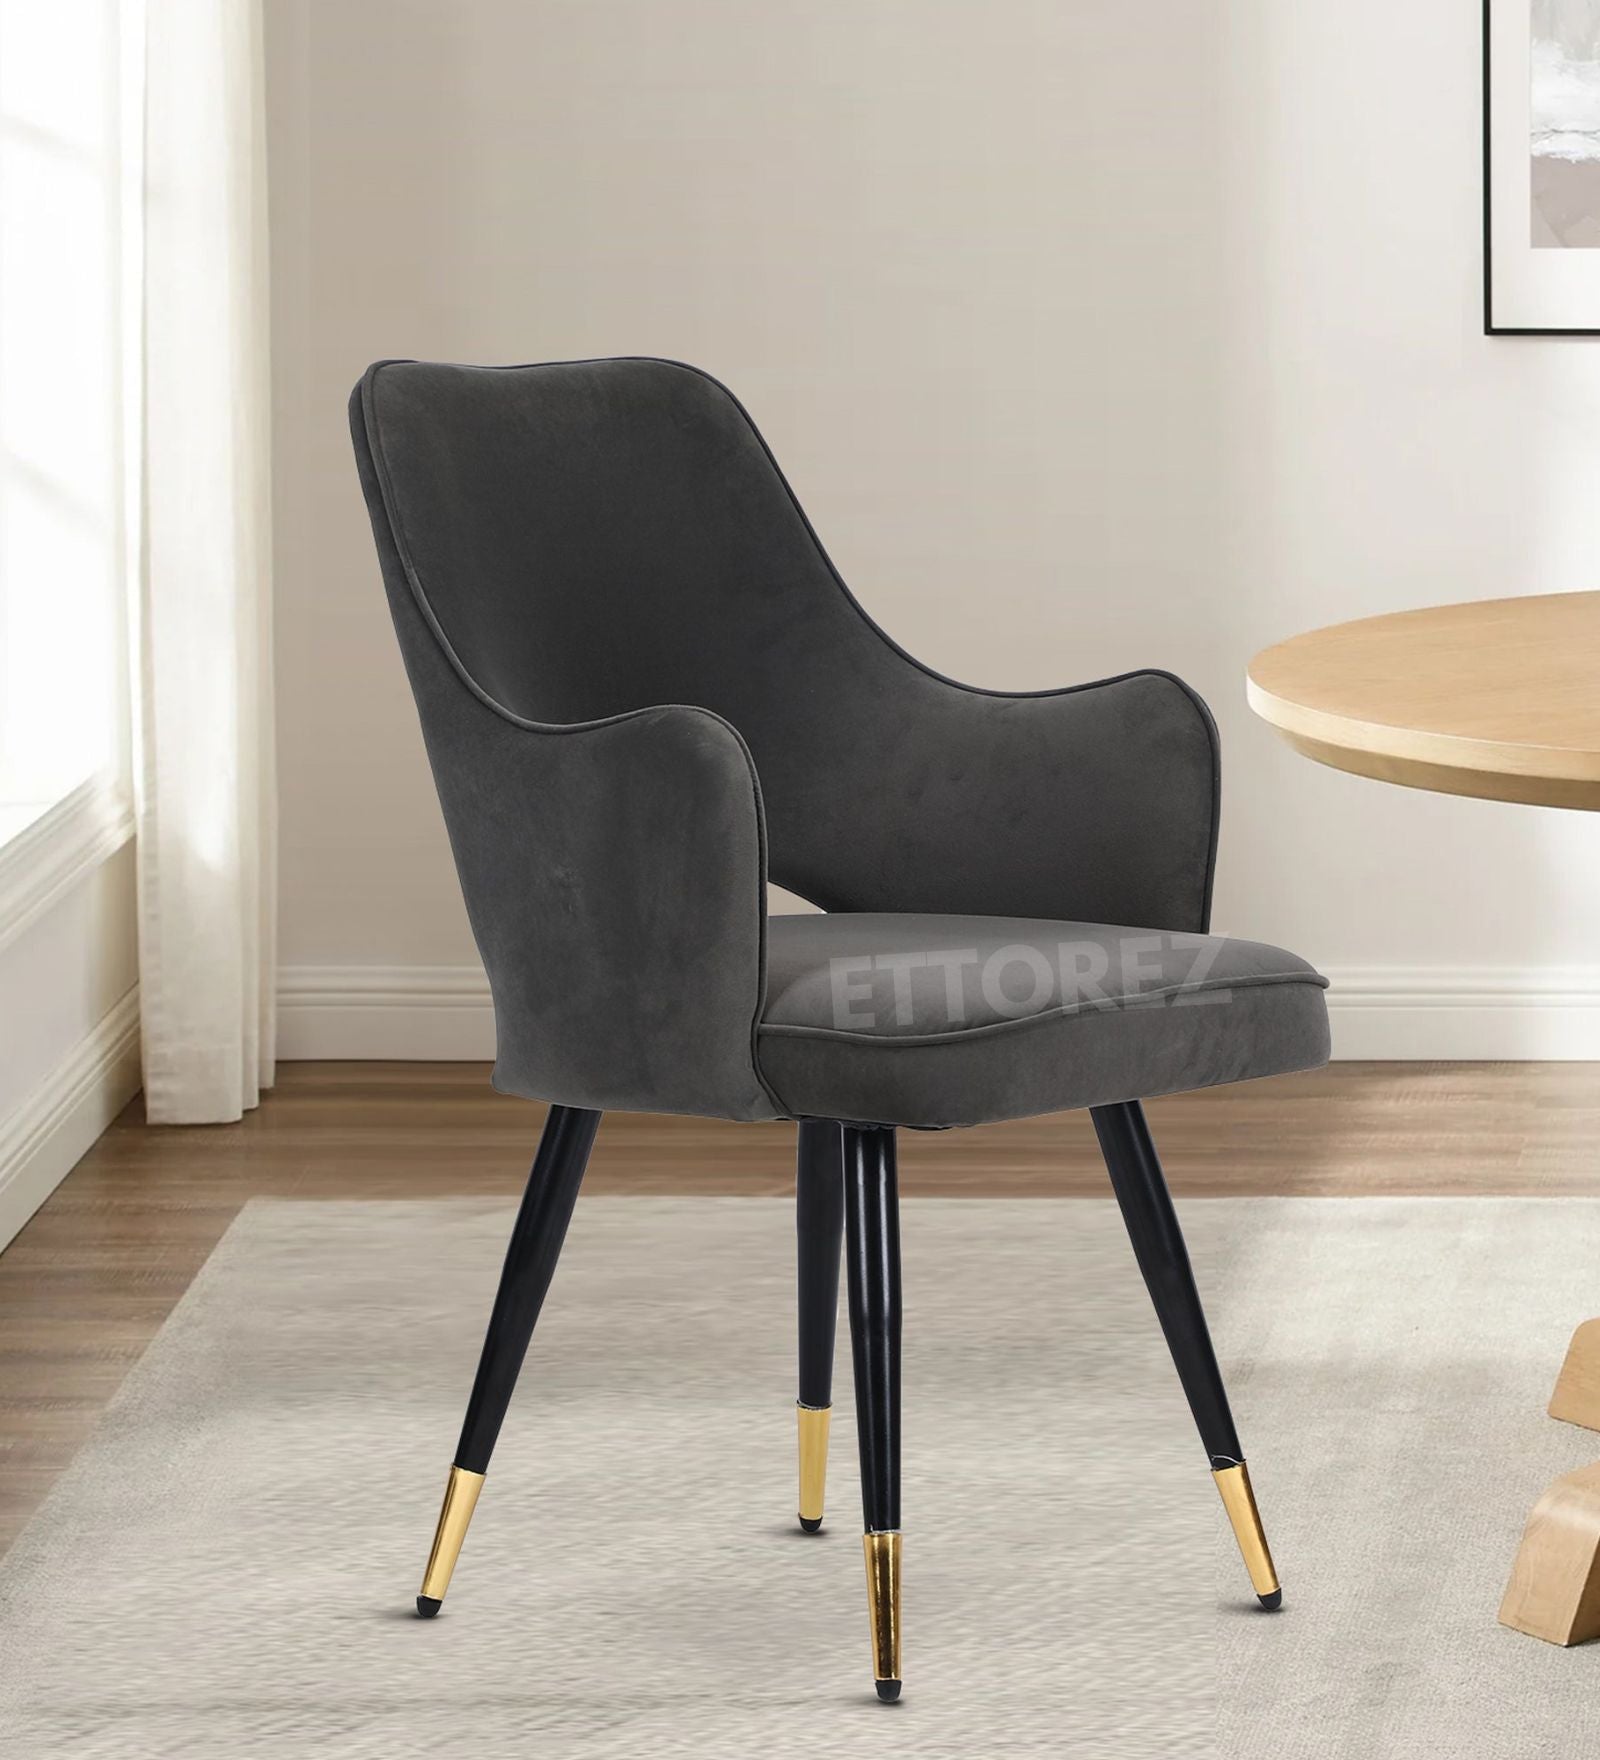 Ettorez ELEGANCE-GREY Modern/Unique Bedroom Accent Chair